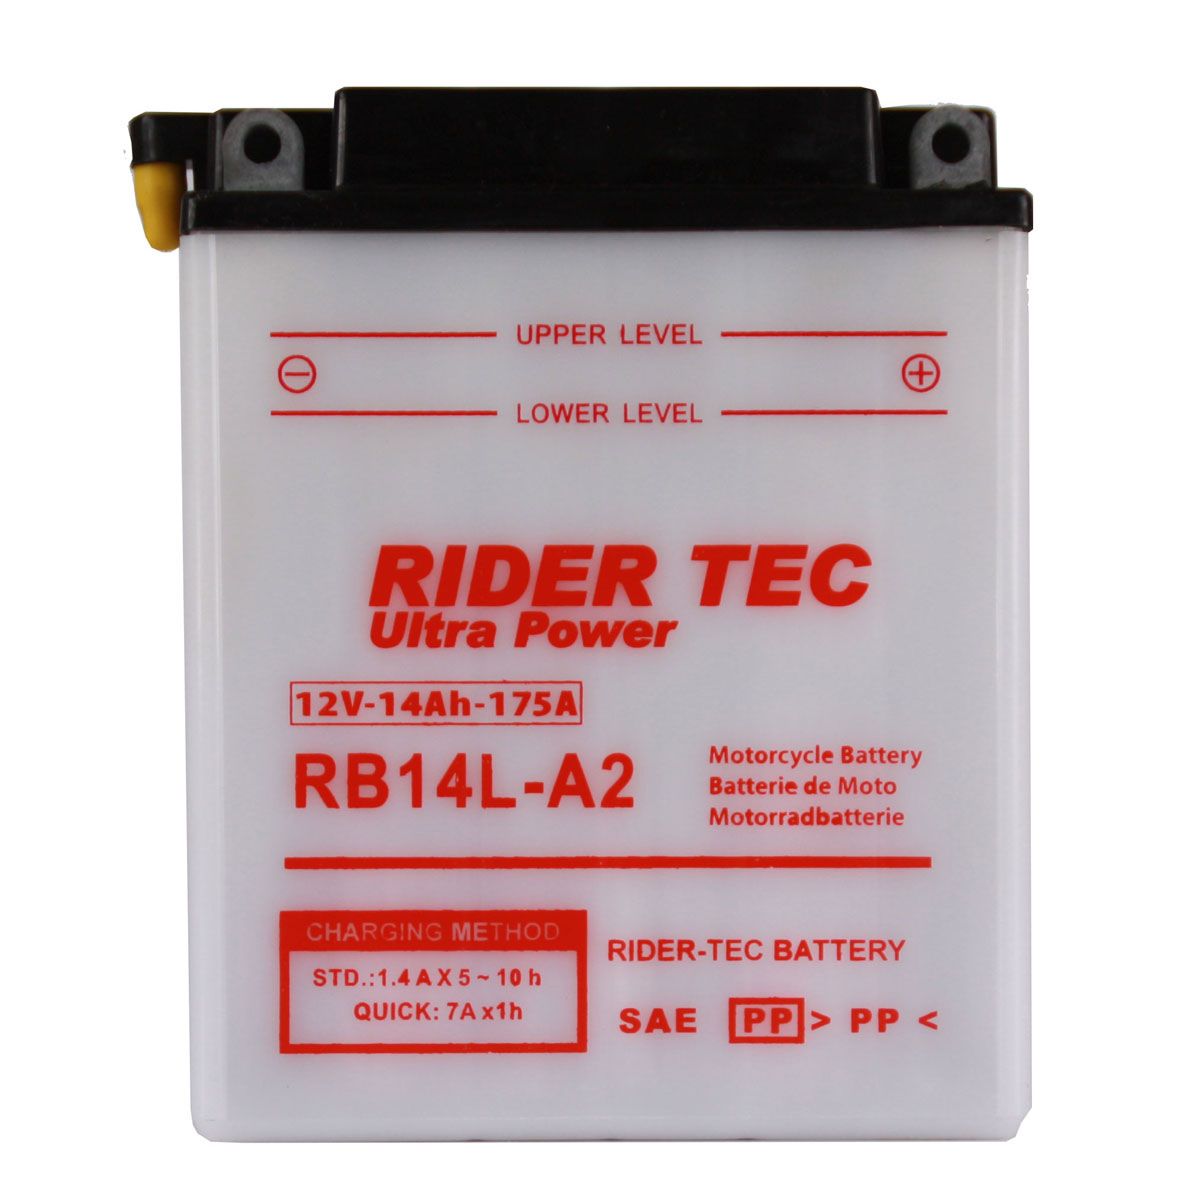 Loisiro - Batterie Moto RB14L-A2 Conventionnelle 12V 14Ah 175A - RIDER-TEC